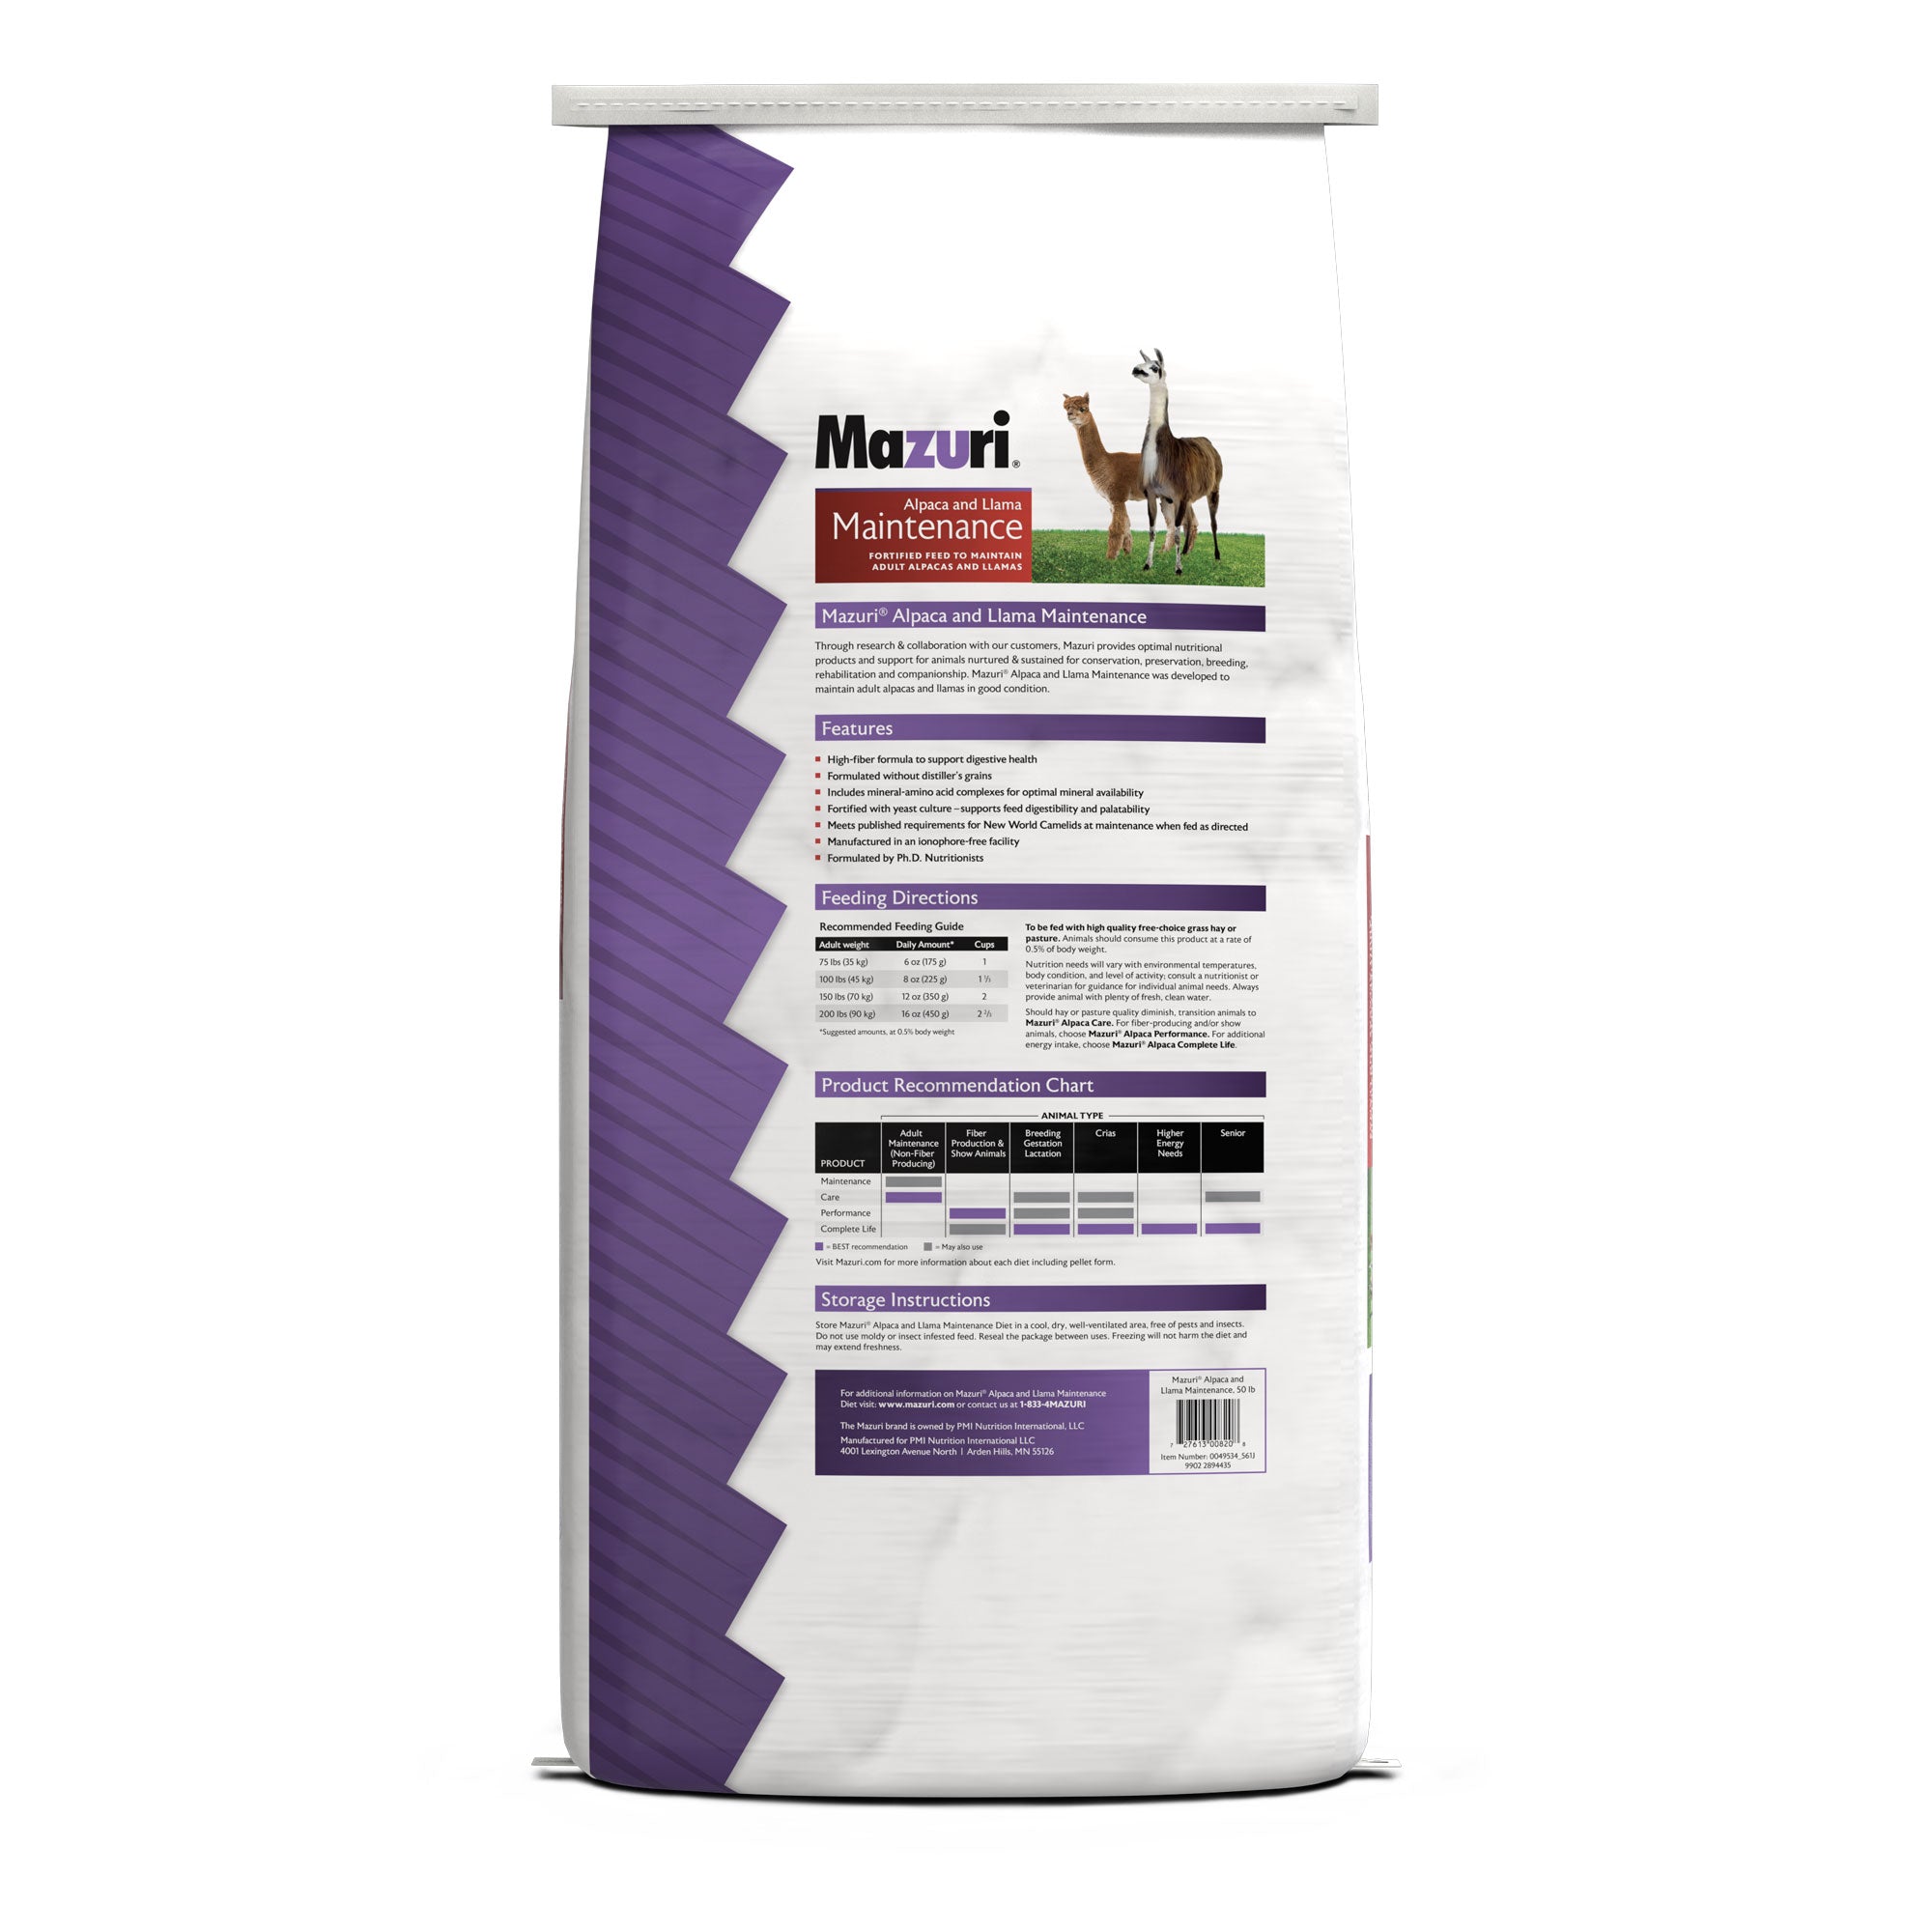 Mazuri Alpaca Llama Maintenance bag back with features, guarantees and feeding directions.